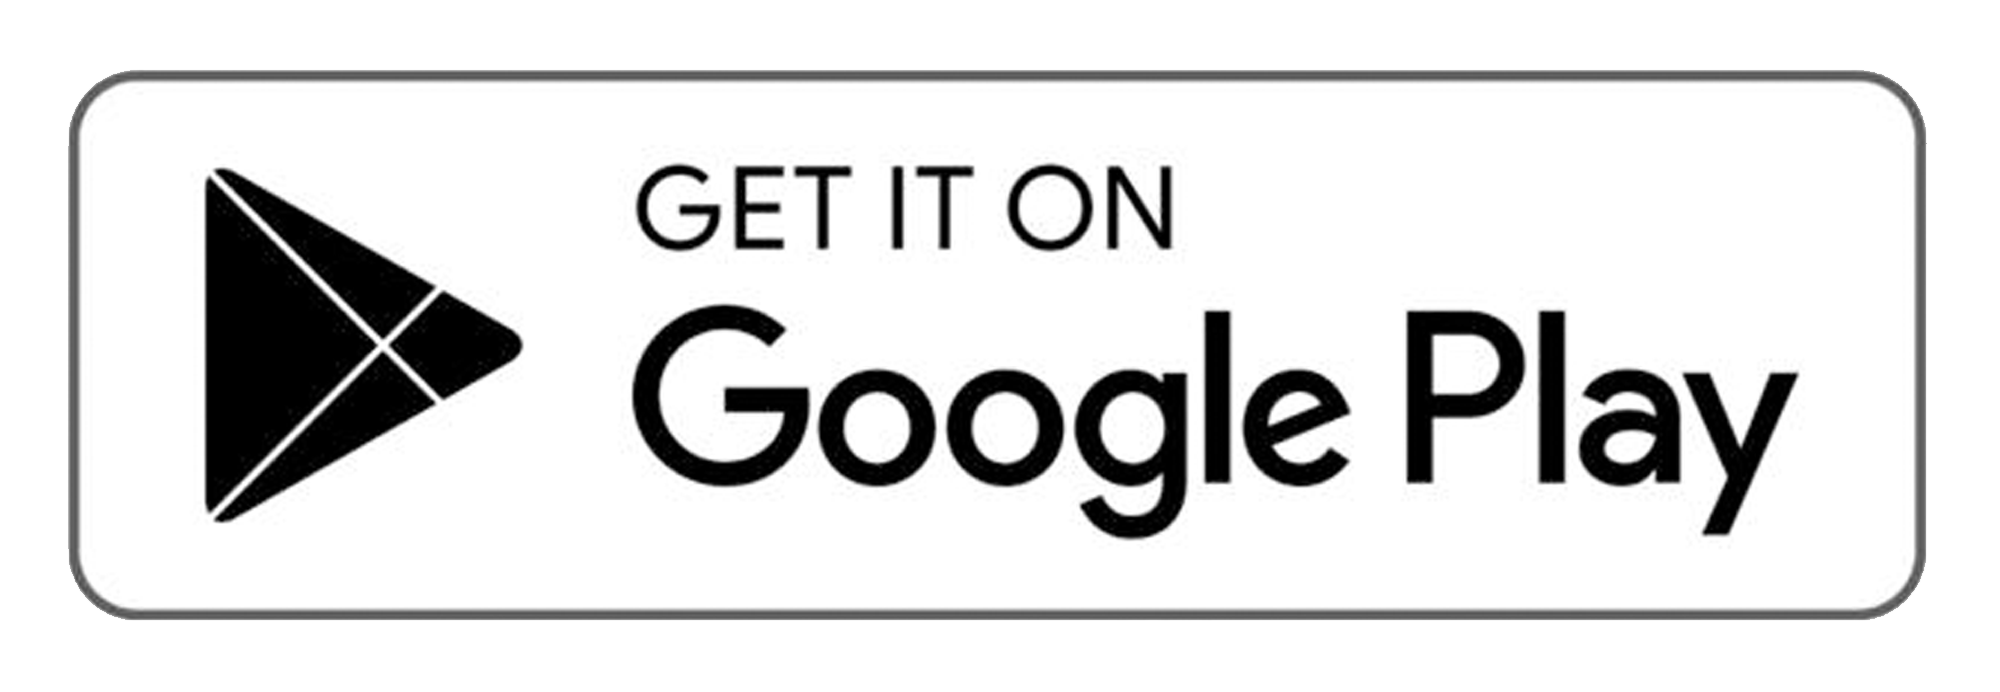 Google Play. Гугл плей лого. Доступно в гугл плей. Google Play логотип PNG. Ин стор